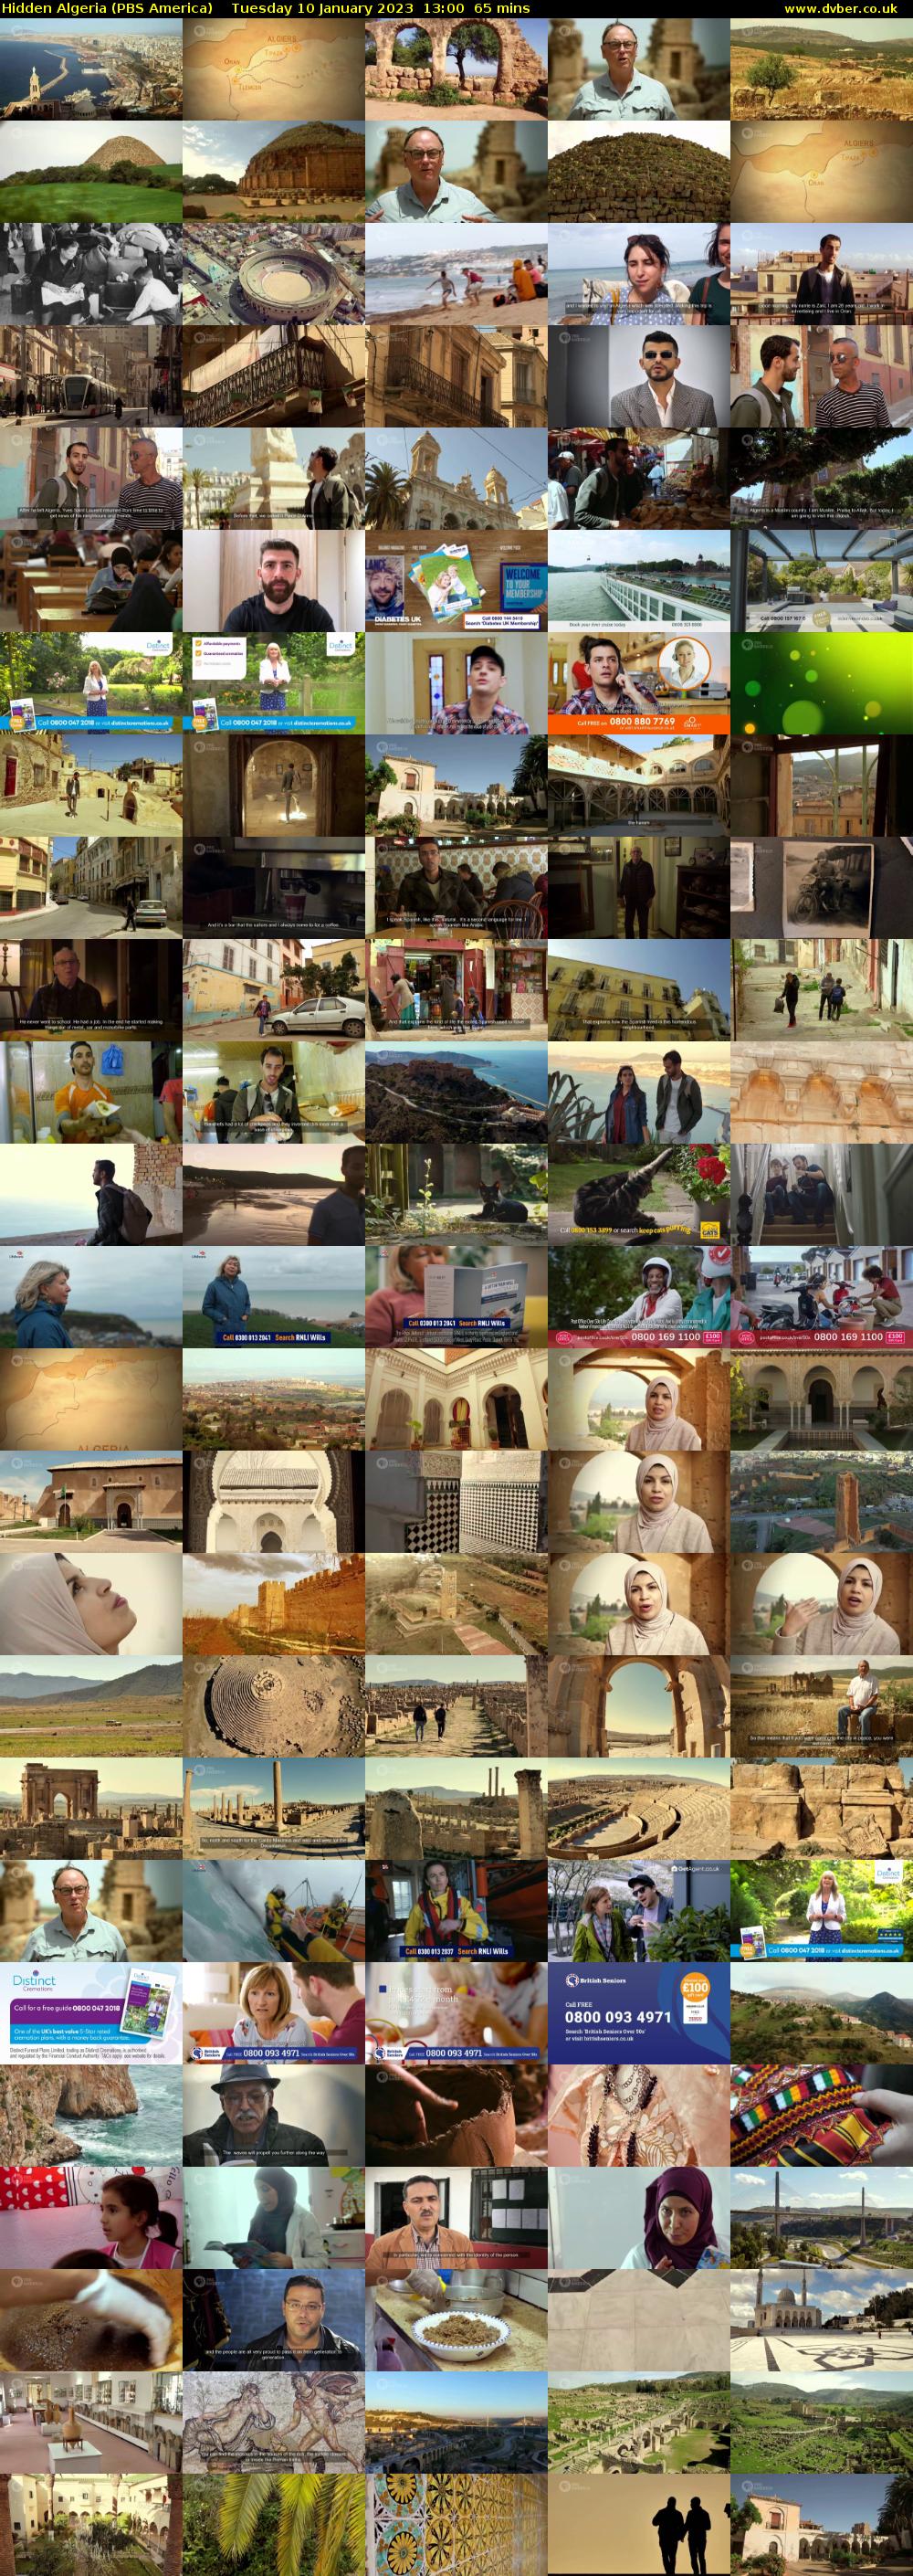 Hidden Algeria (PBS America) Tuesday 10 January 2023 13:00 - 14:05